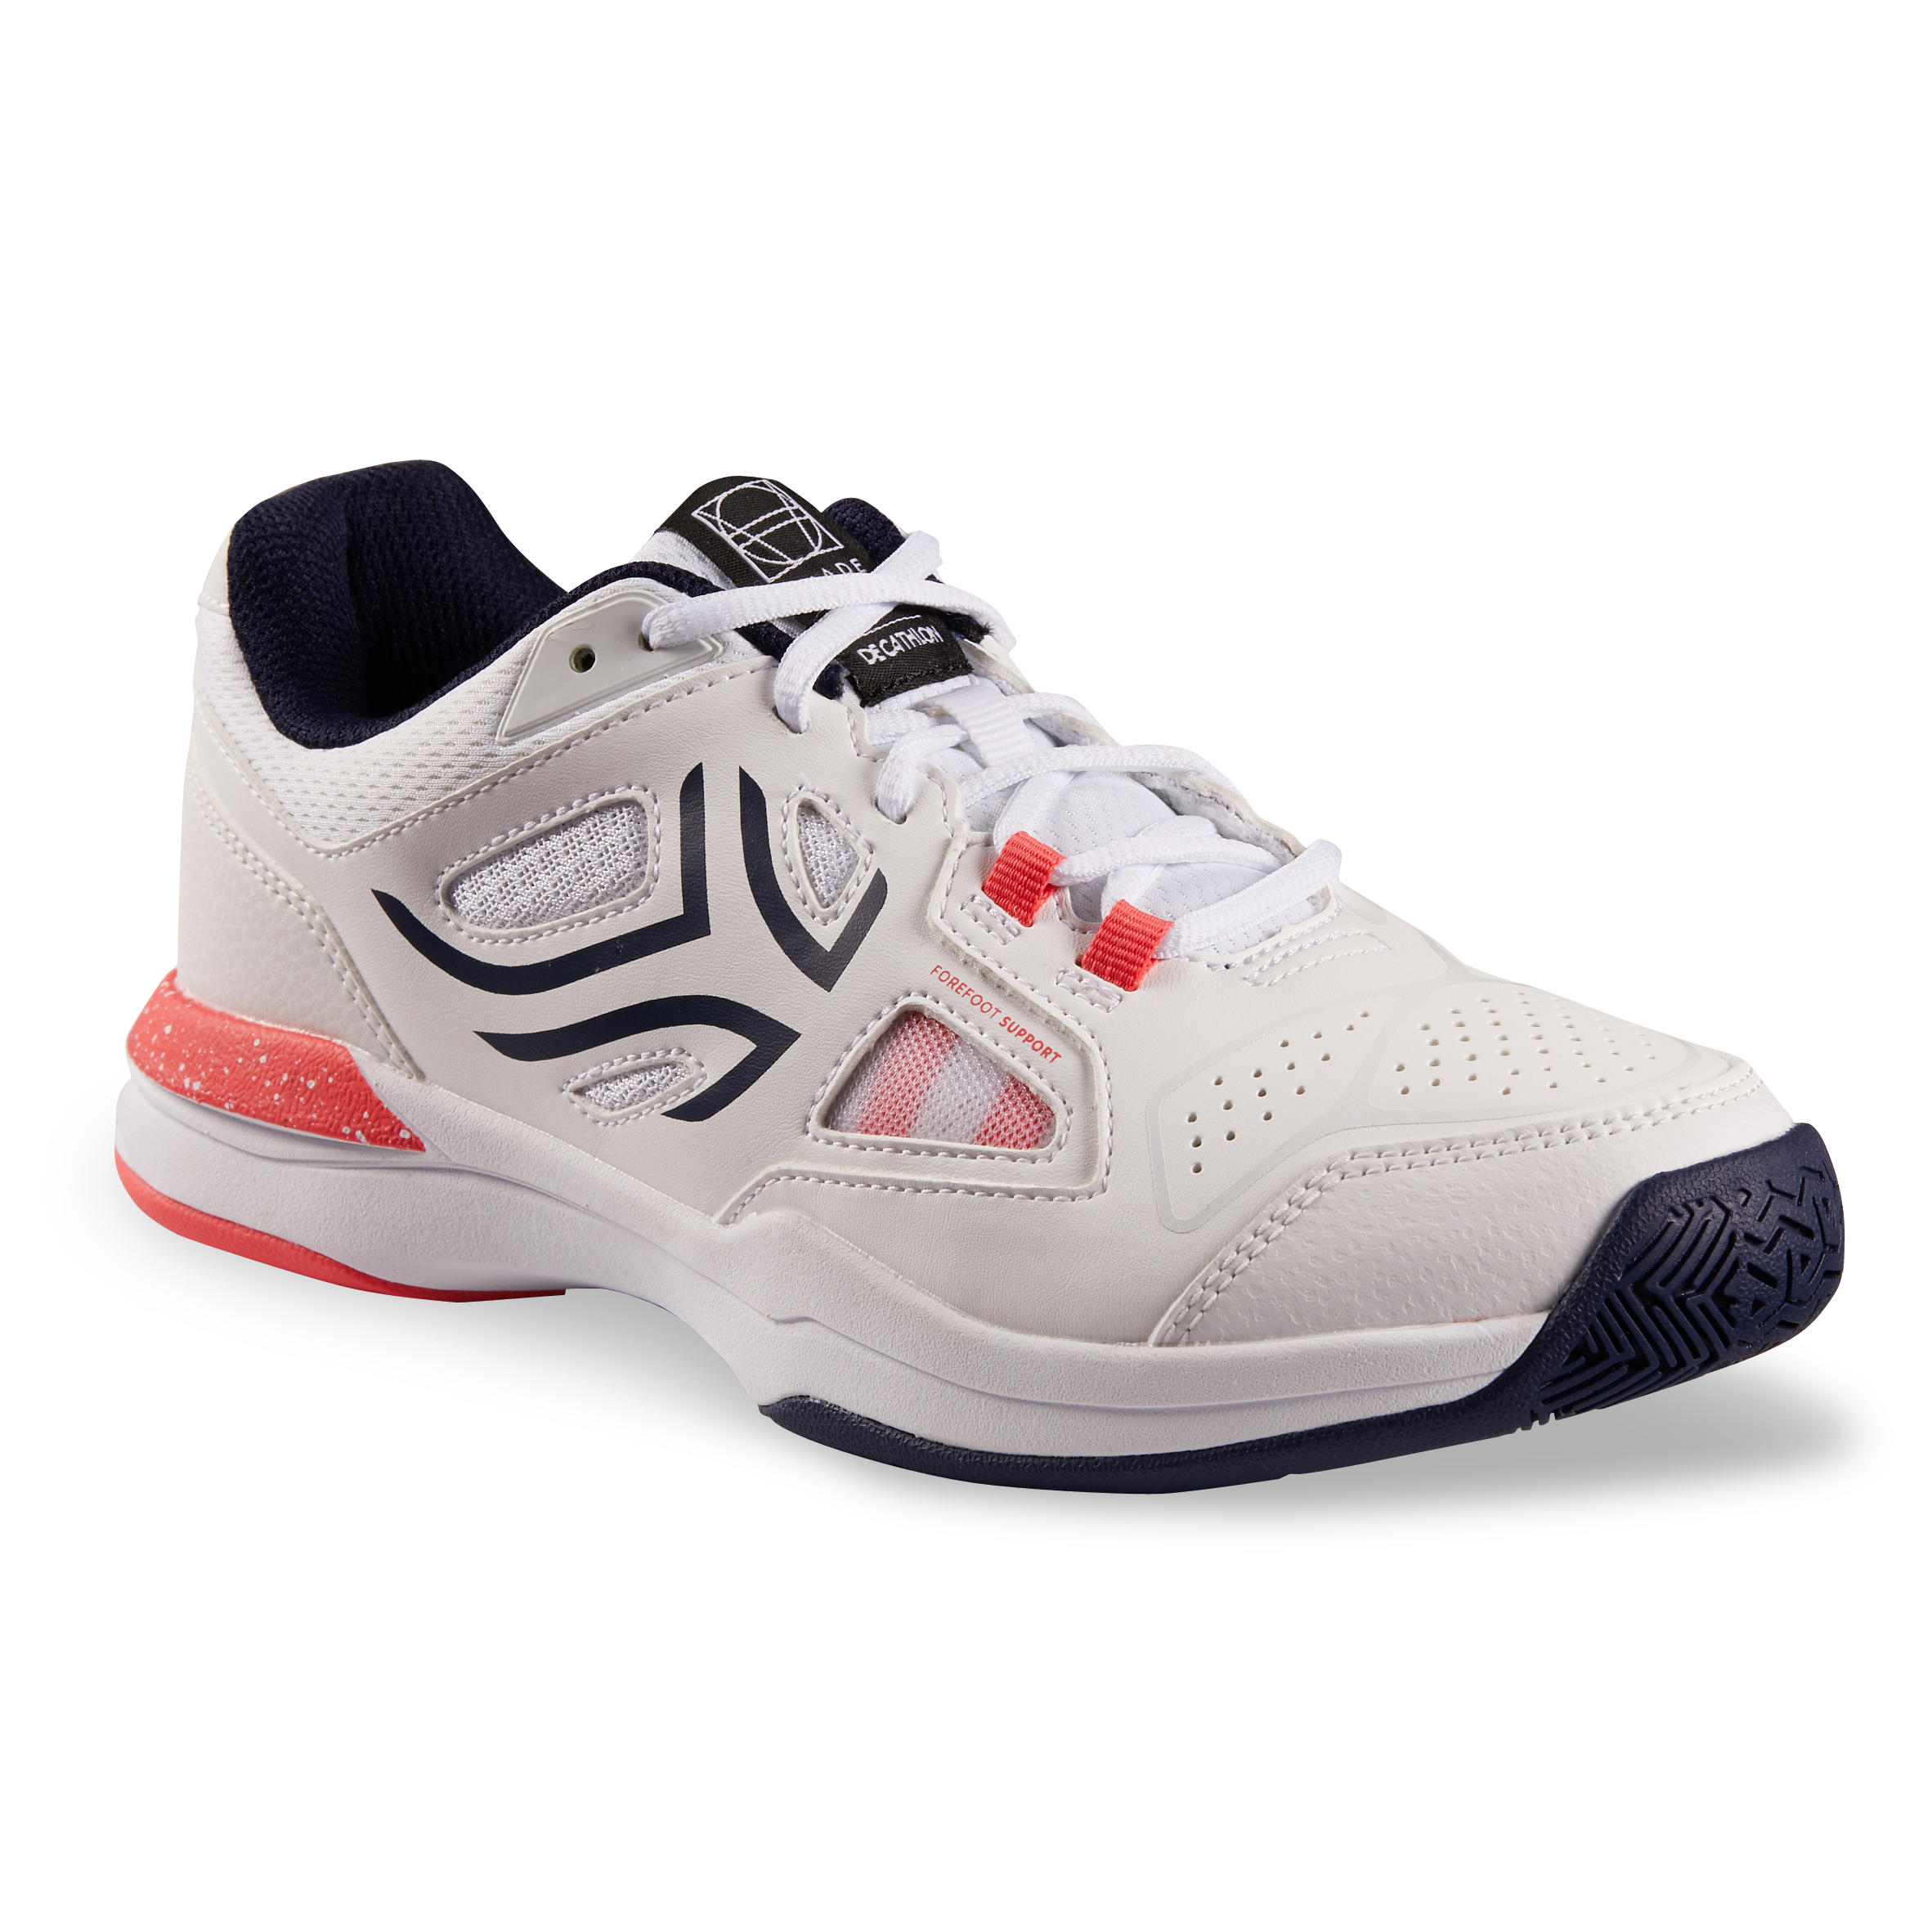 Introducir 43+ imagen decathlon tennis shoes